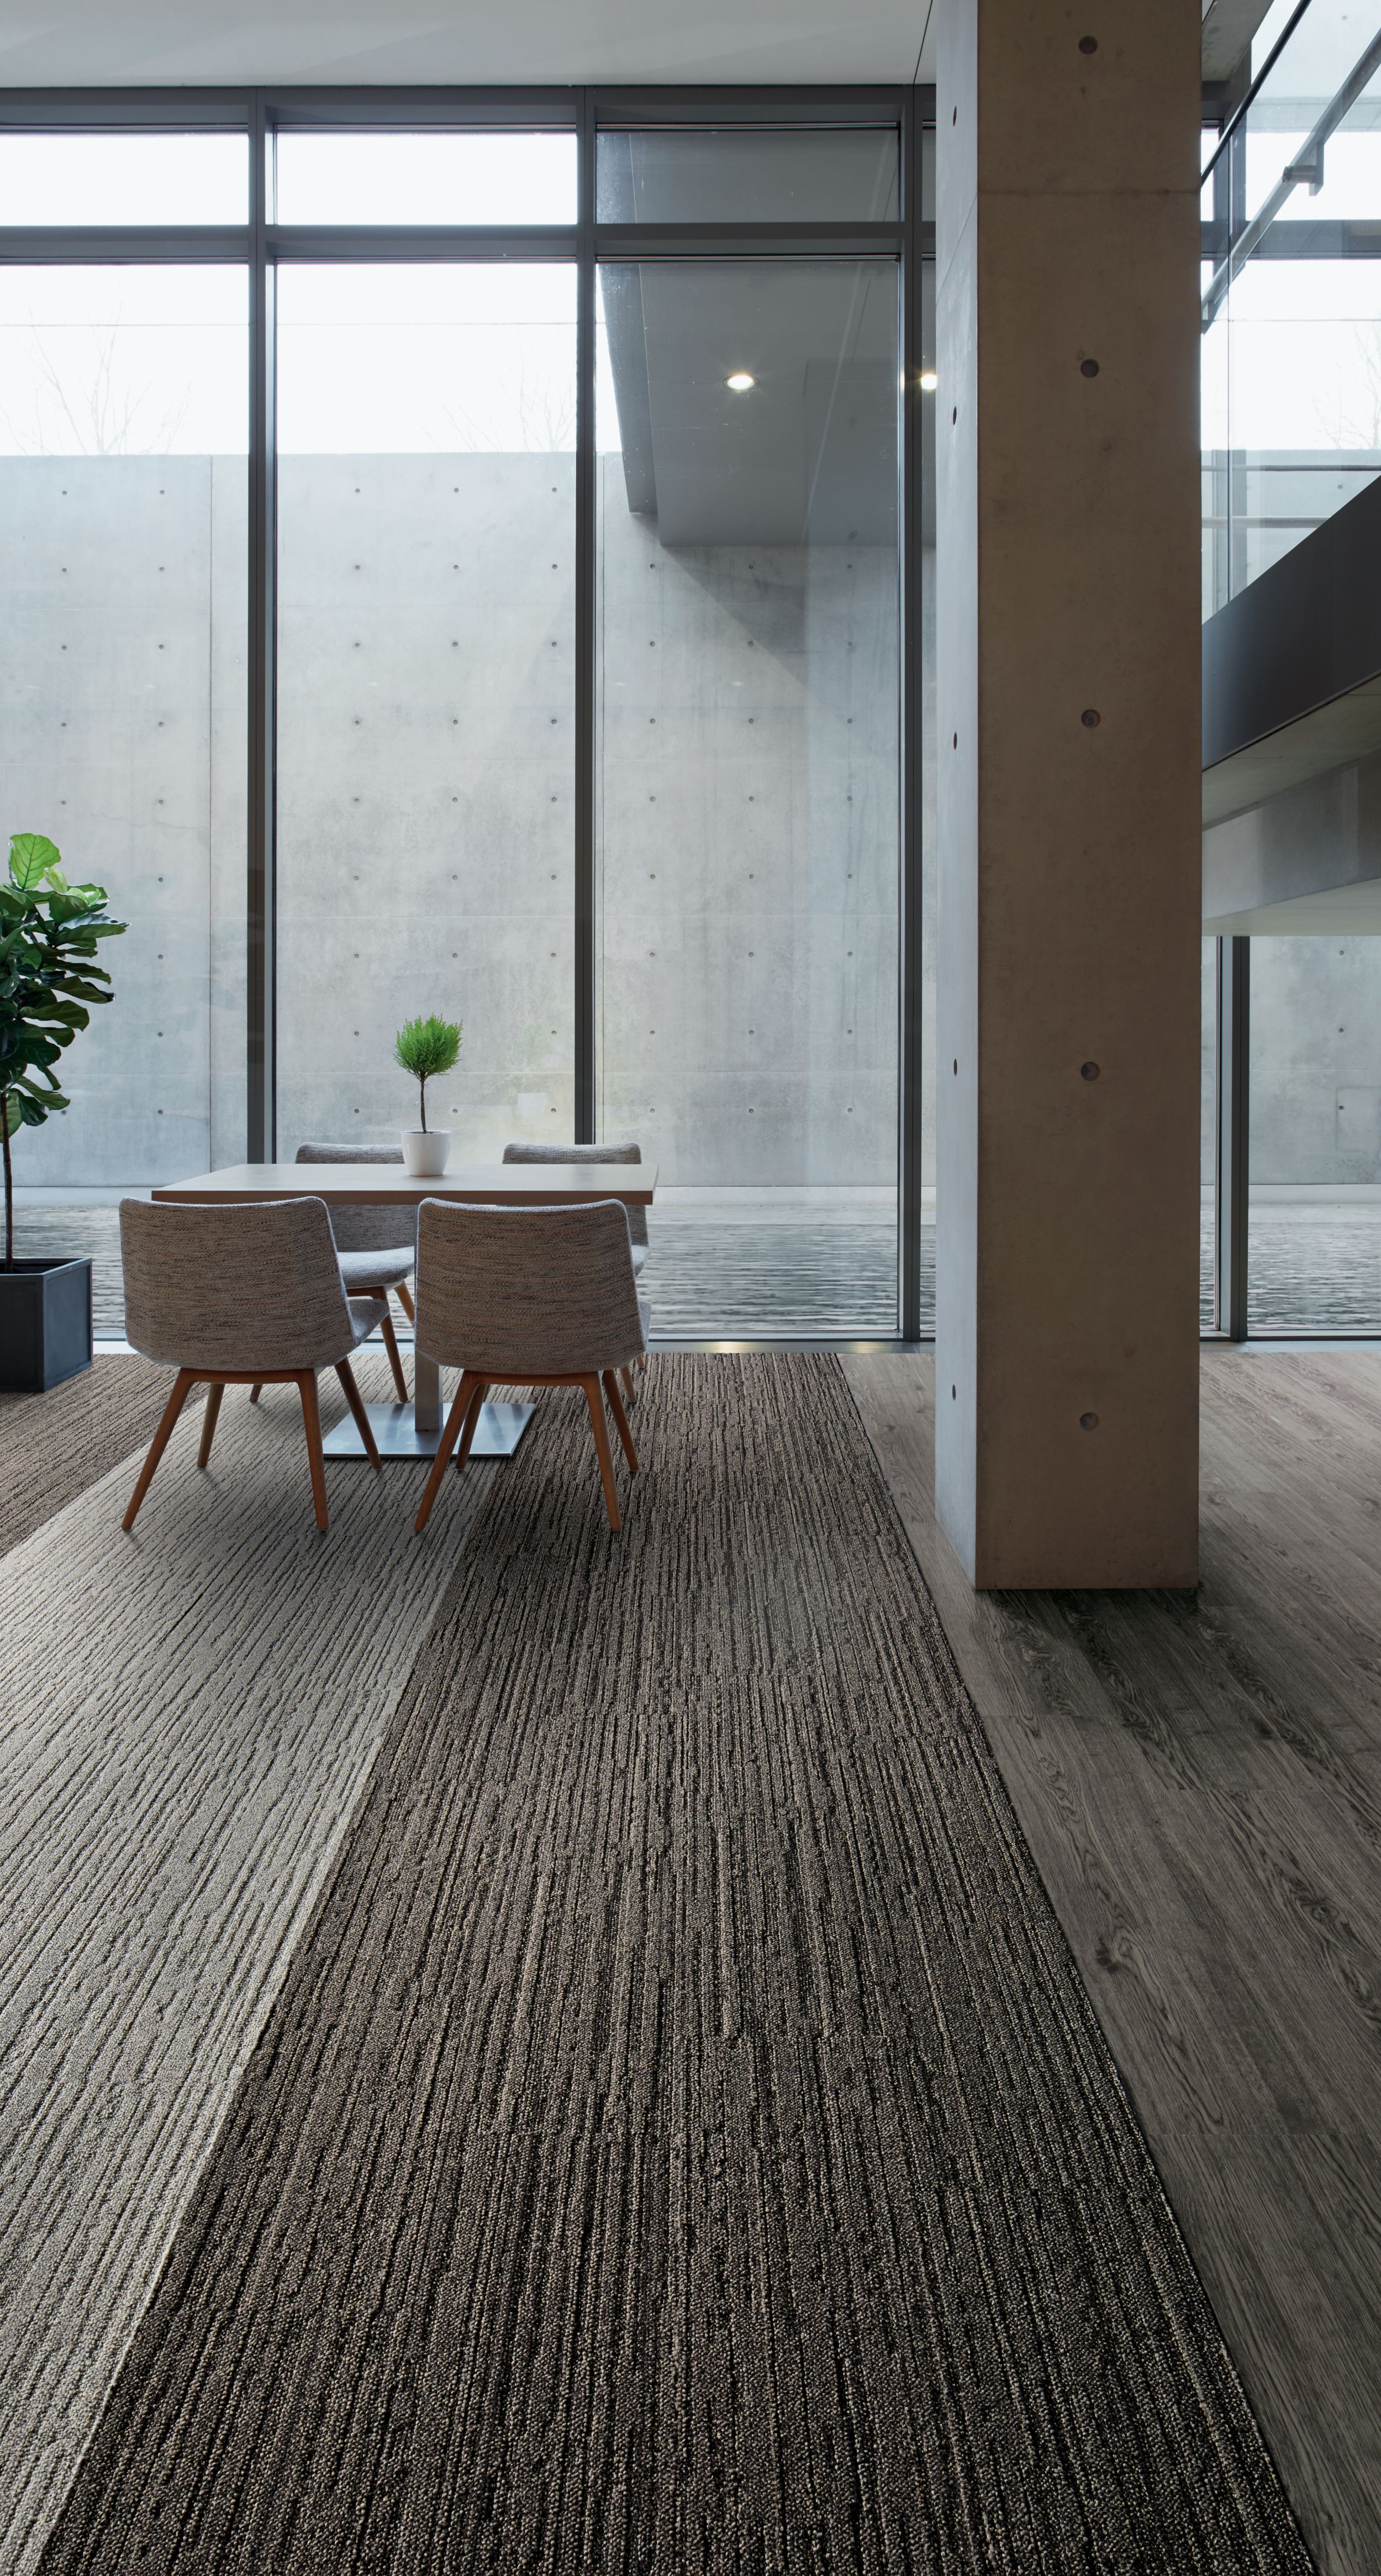 Interface WW880 plank carpet tile and Natural Woodgrains LVT in office common area numéro d’image 2